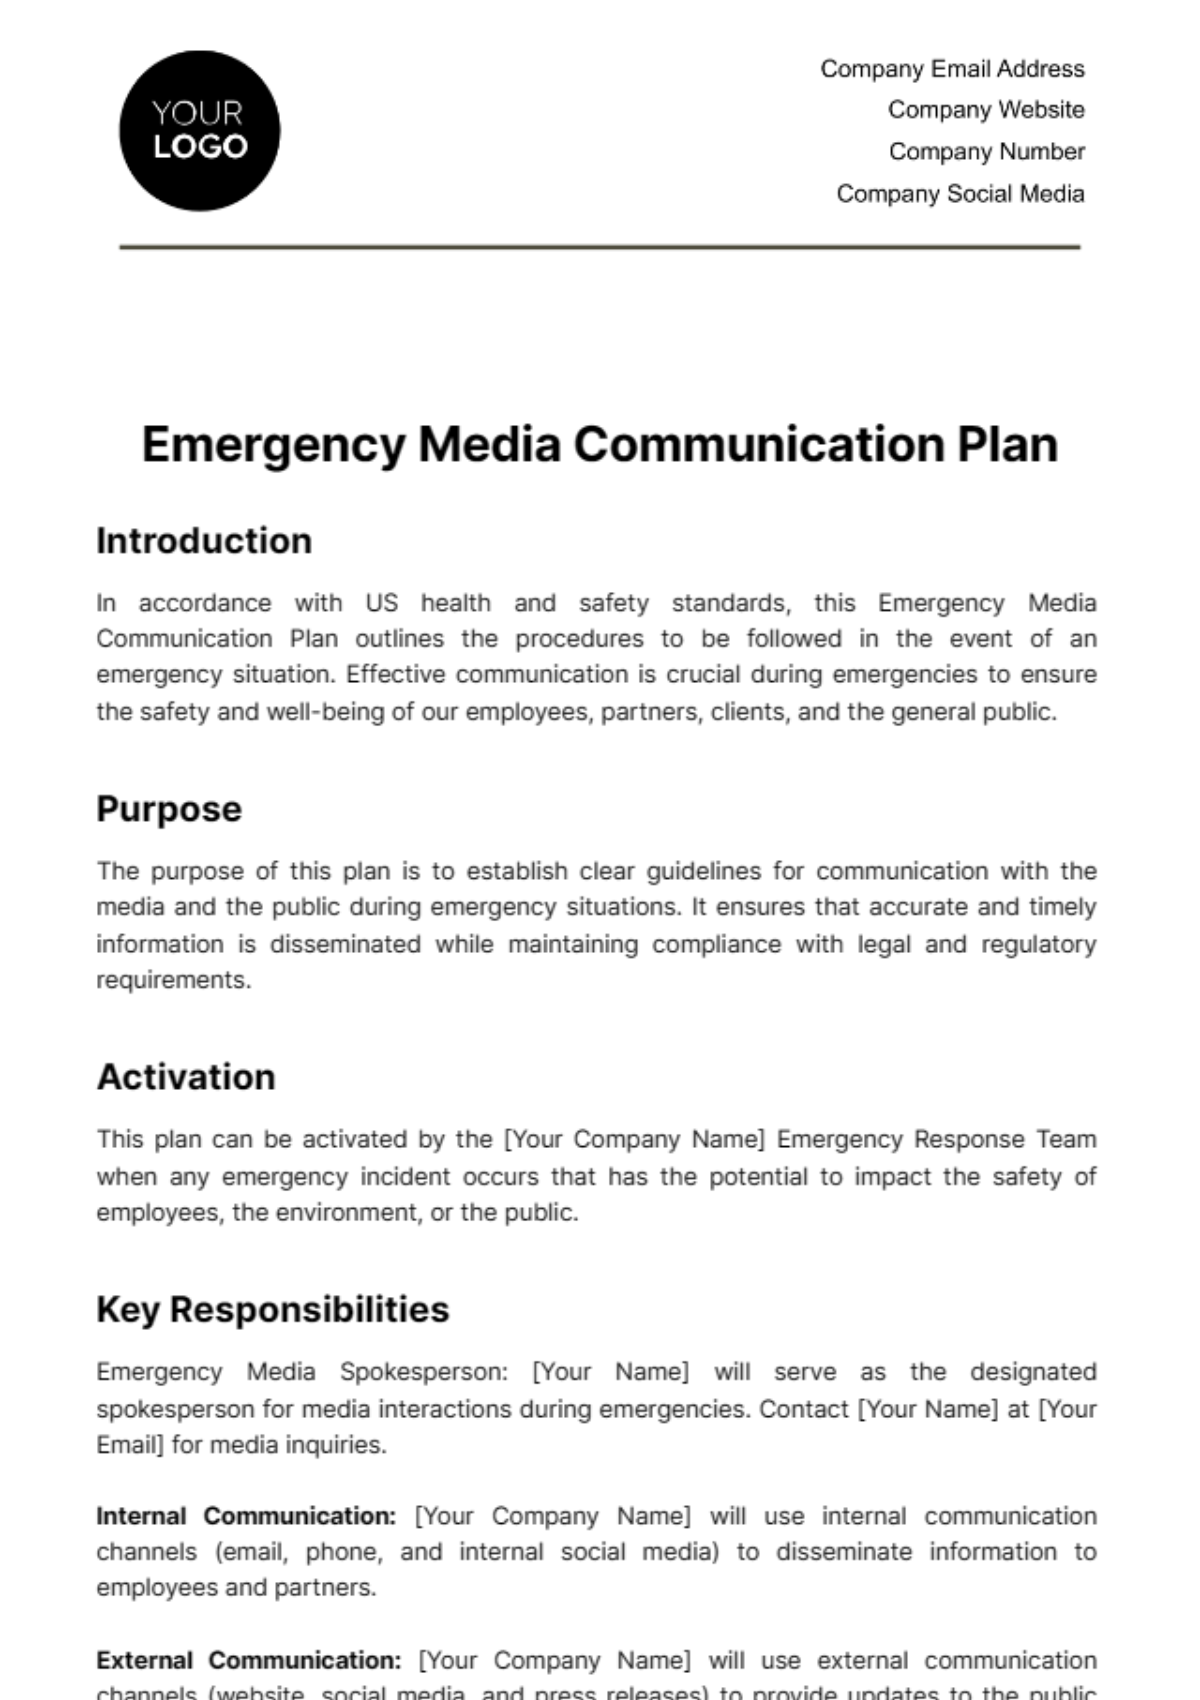 Emergency Media Communication Plan Template